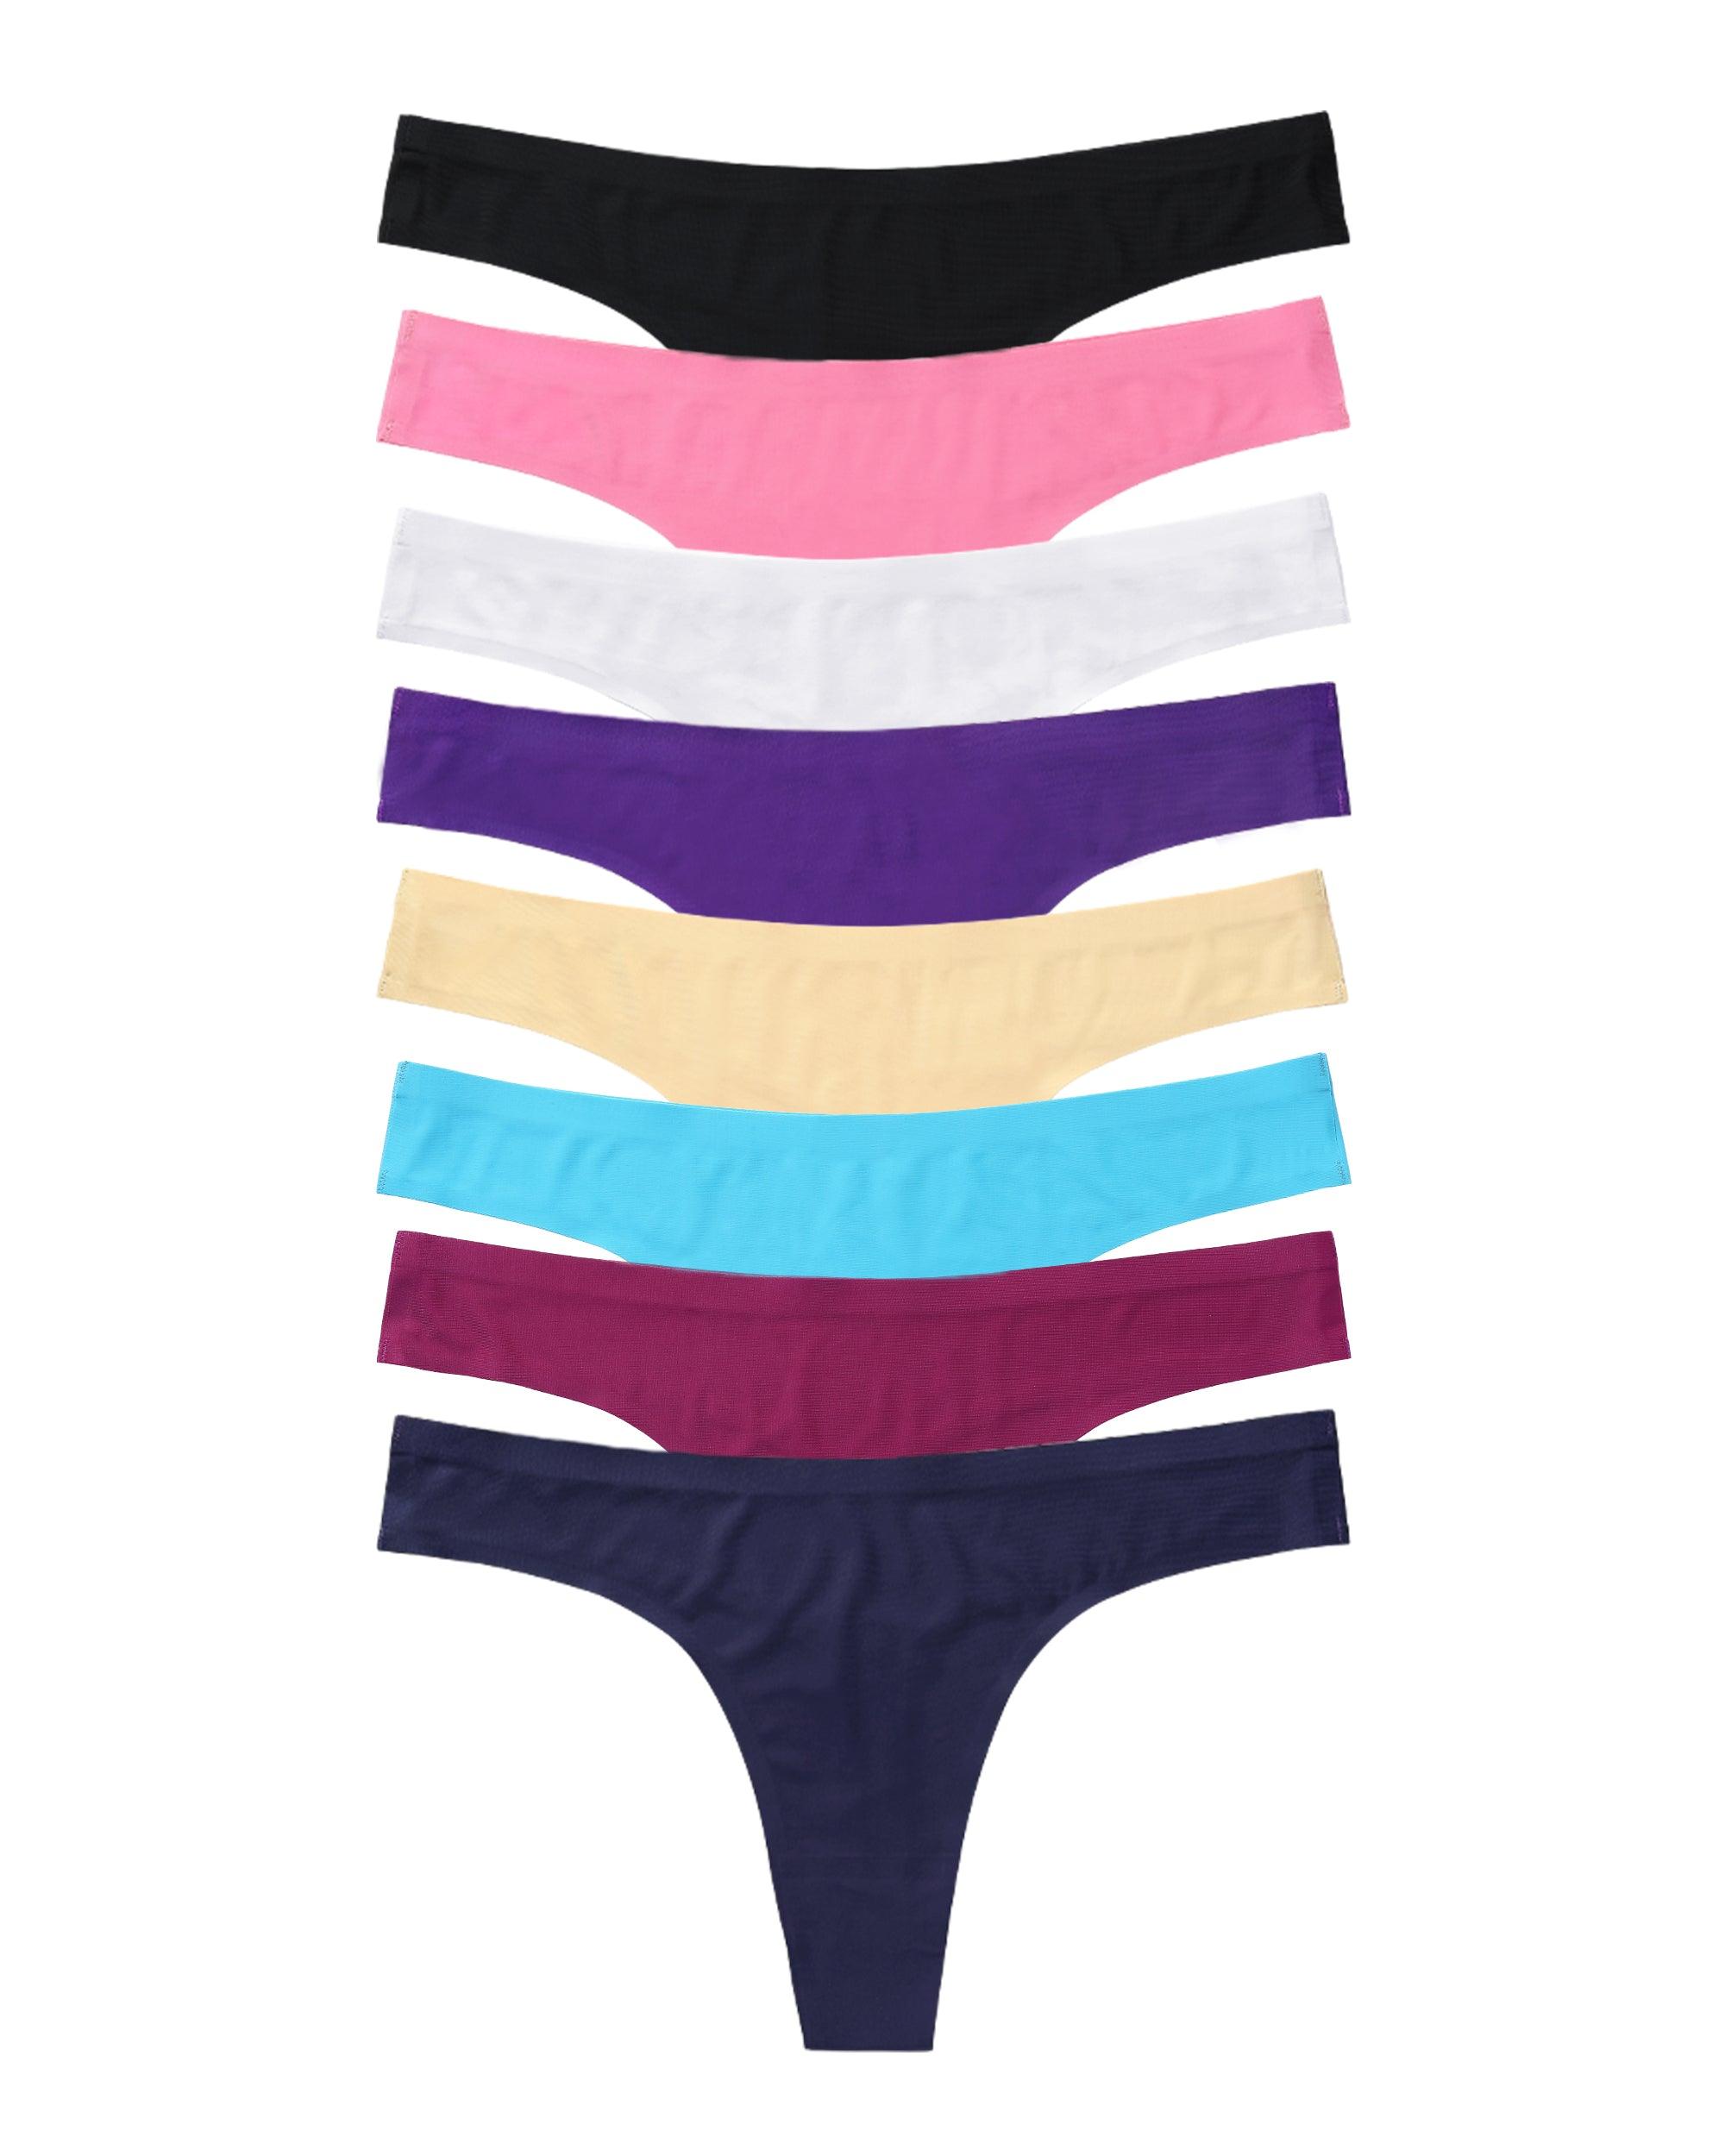  Altheanray Womens Underwear Cotton Underwear For Women  Seamless Hipster Bikini Briefs Panties 6 Pack